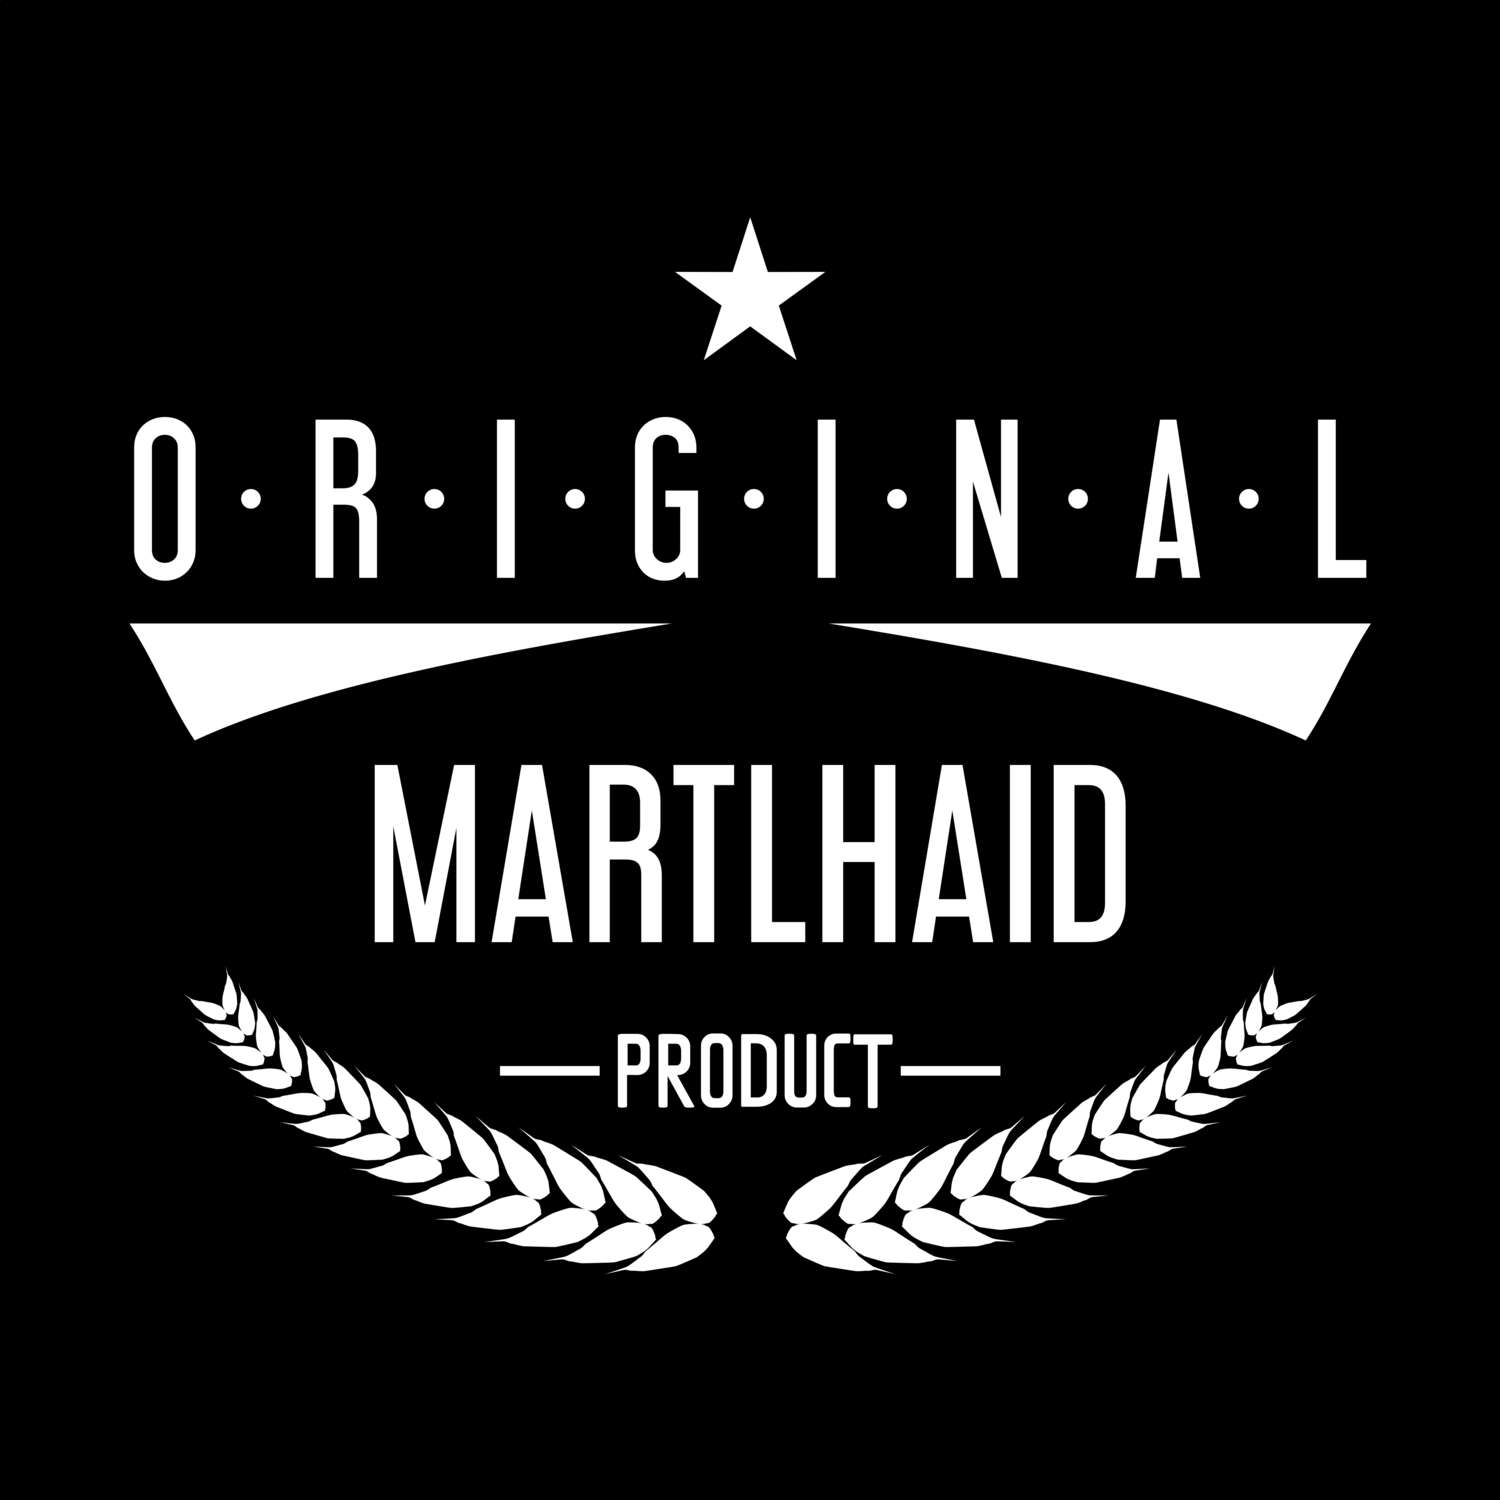 Martlhaid T-Shirt »Original Product«